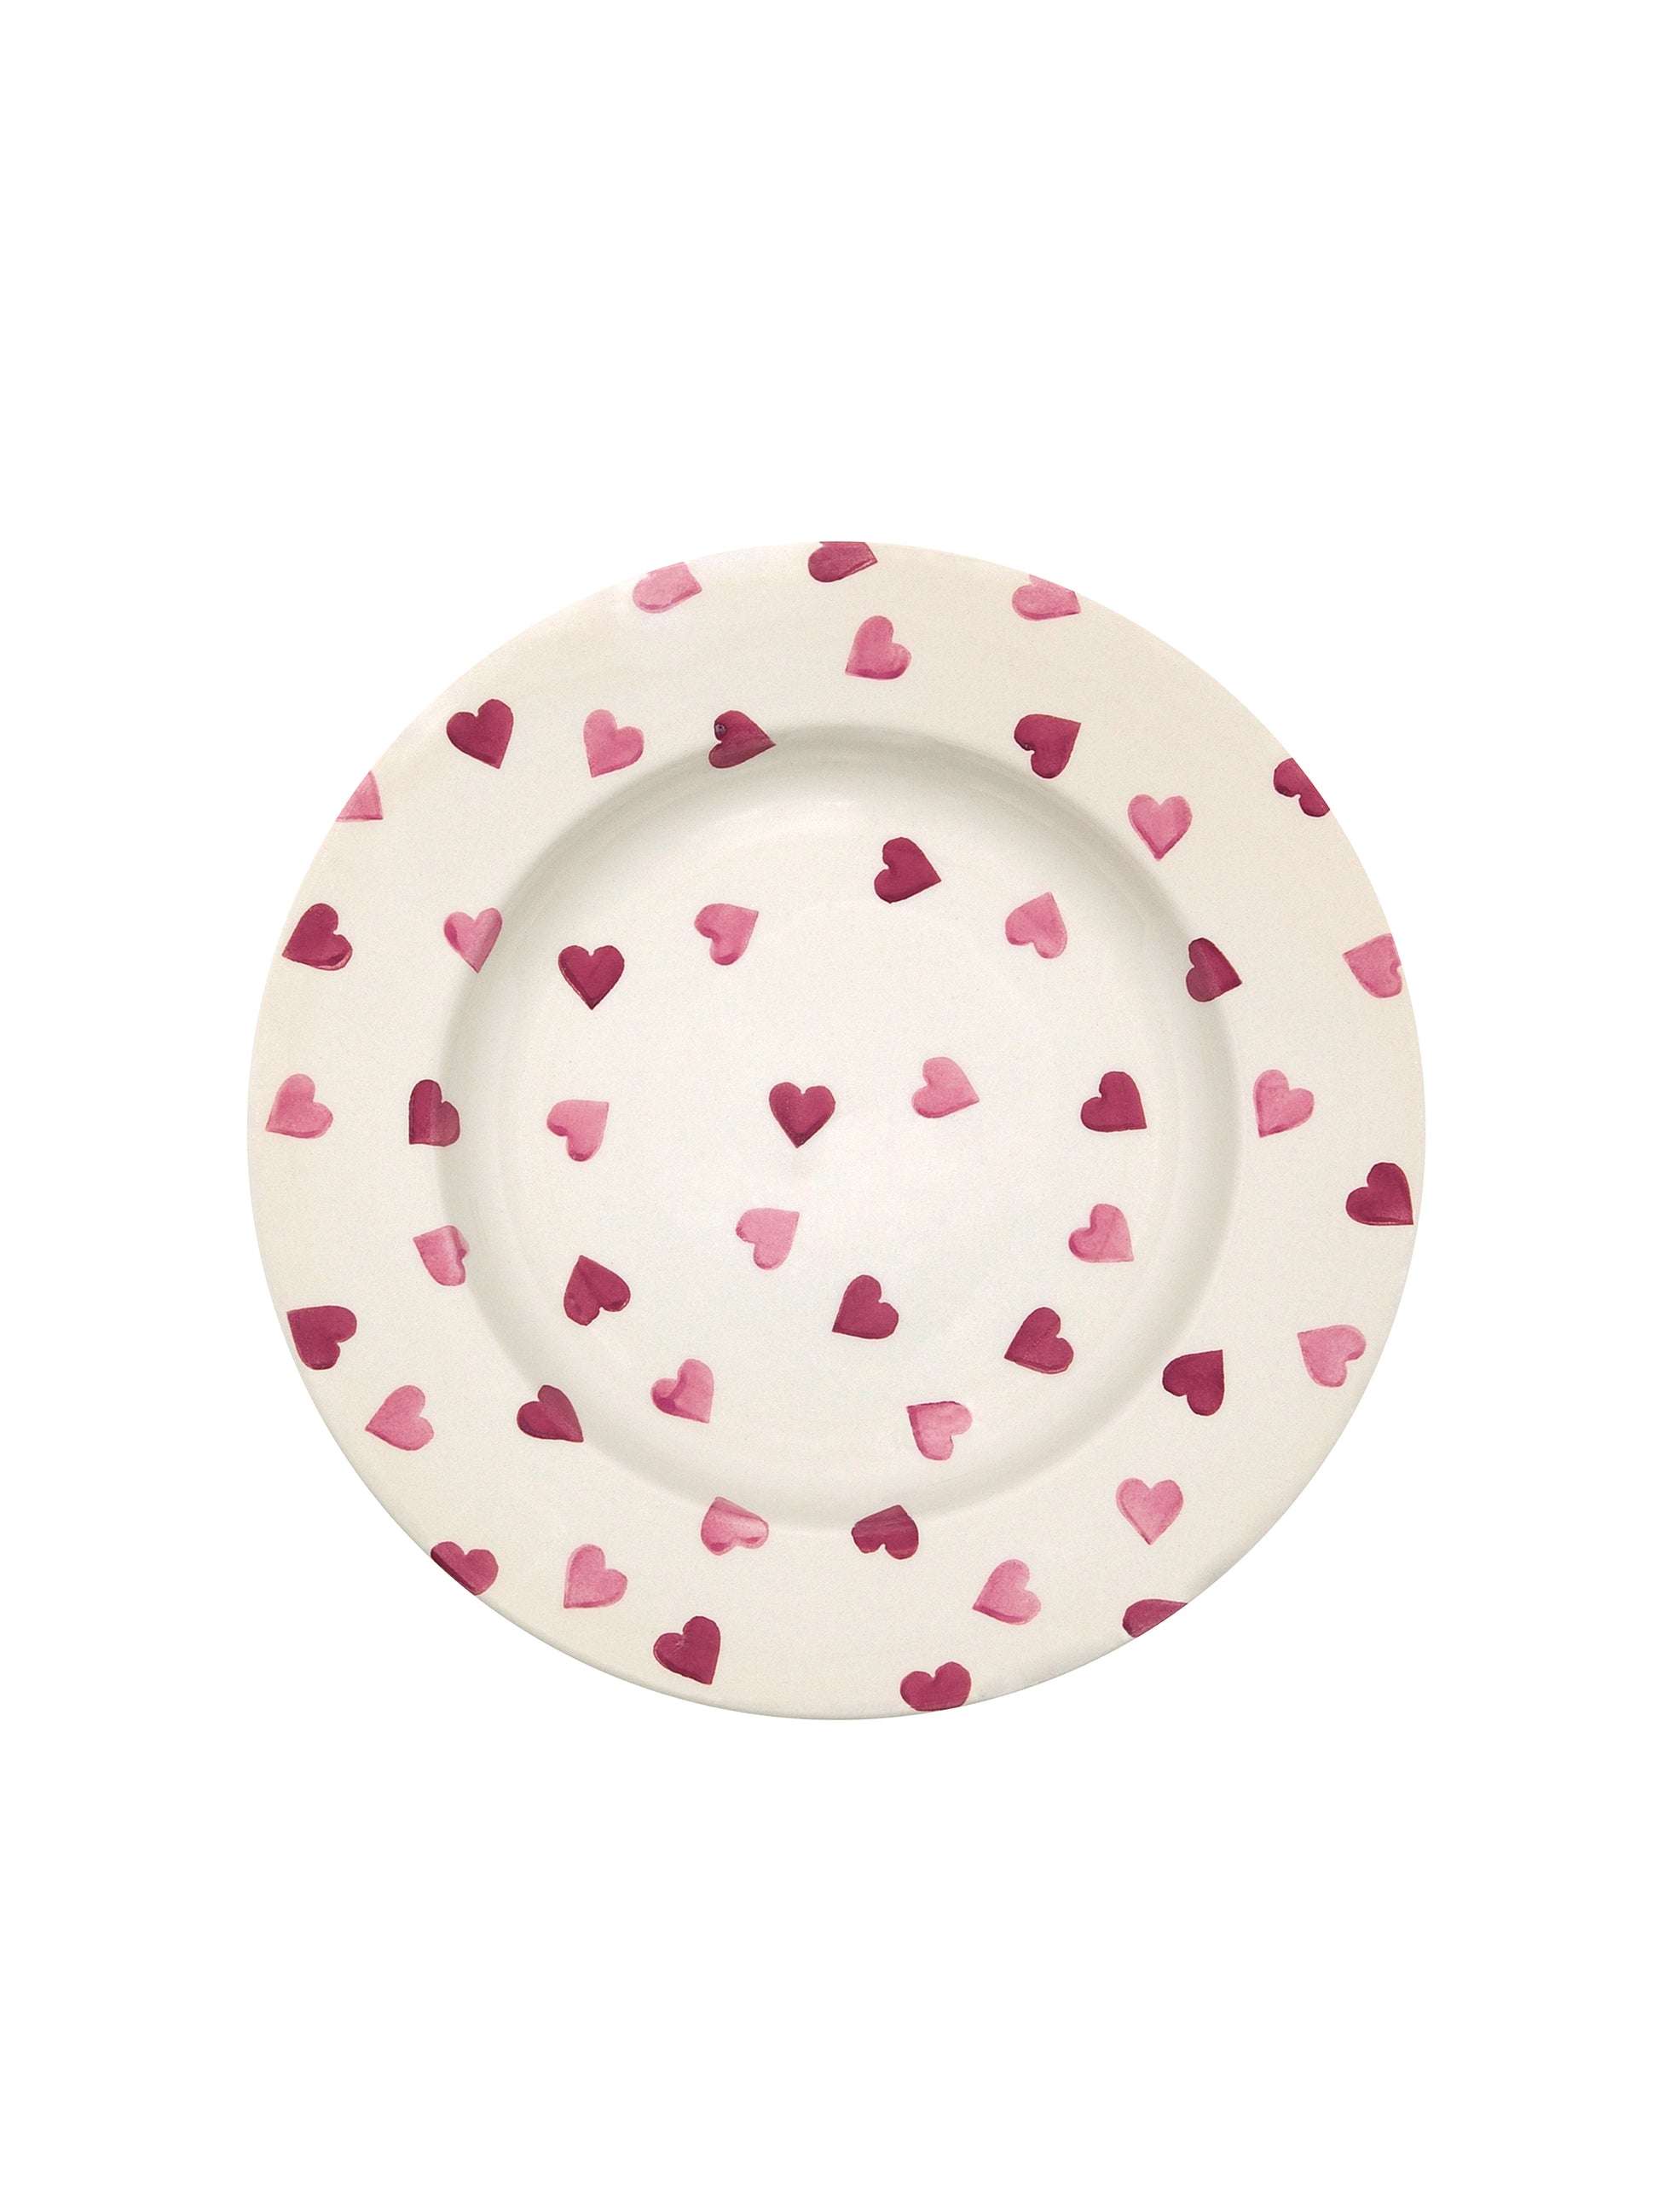 Emma Bridgewater Pink Hearts 10.5 Inch Plate Weston Table